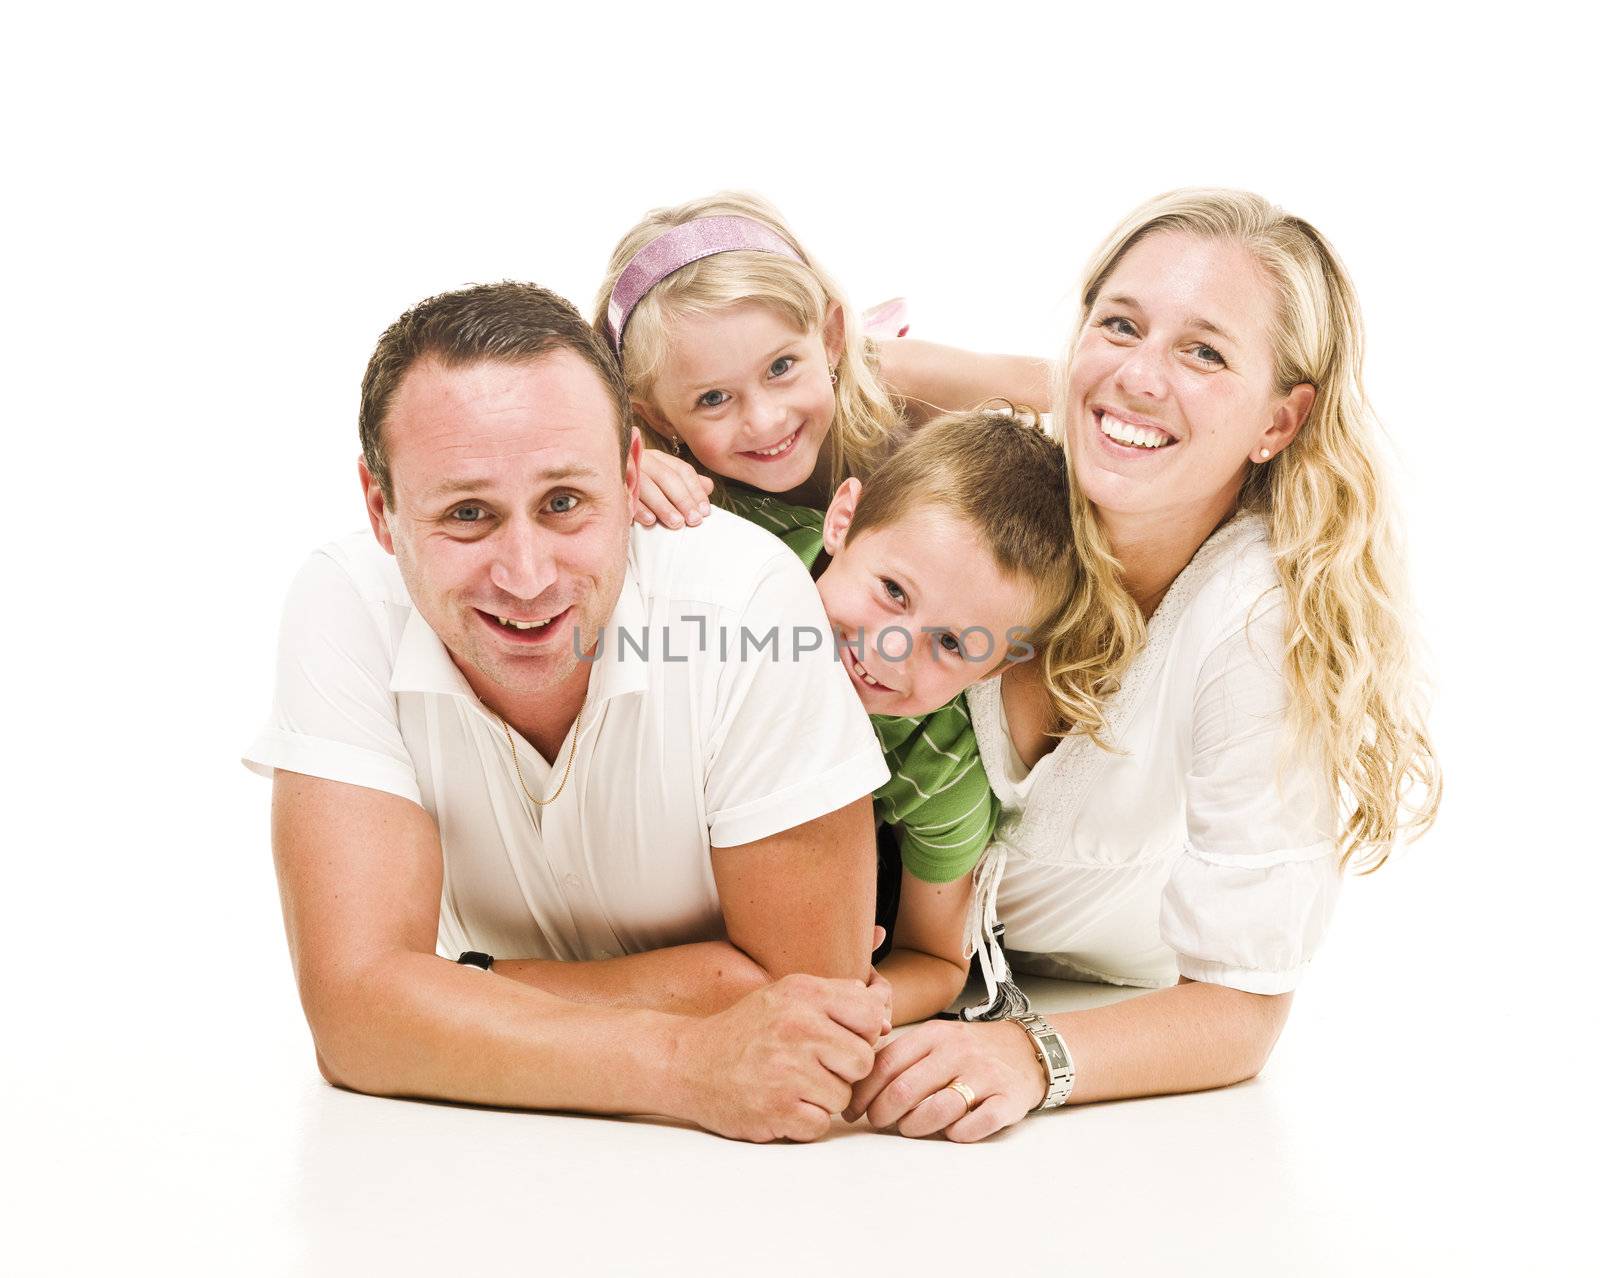 Family isolated on white background